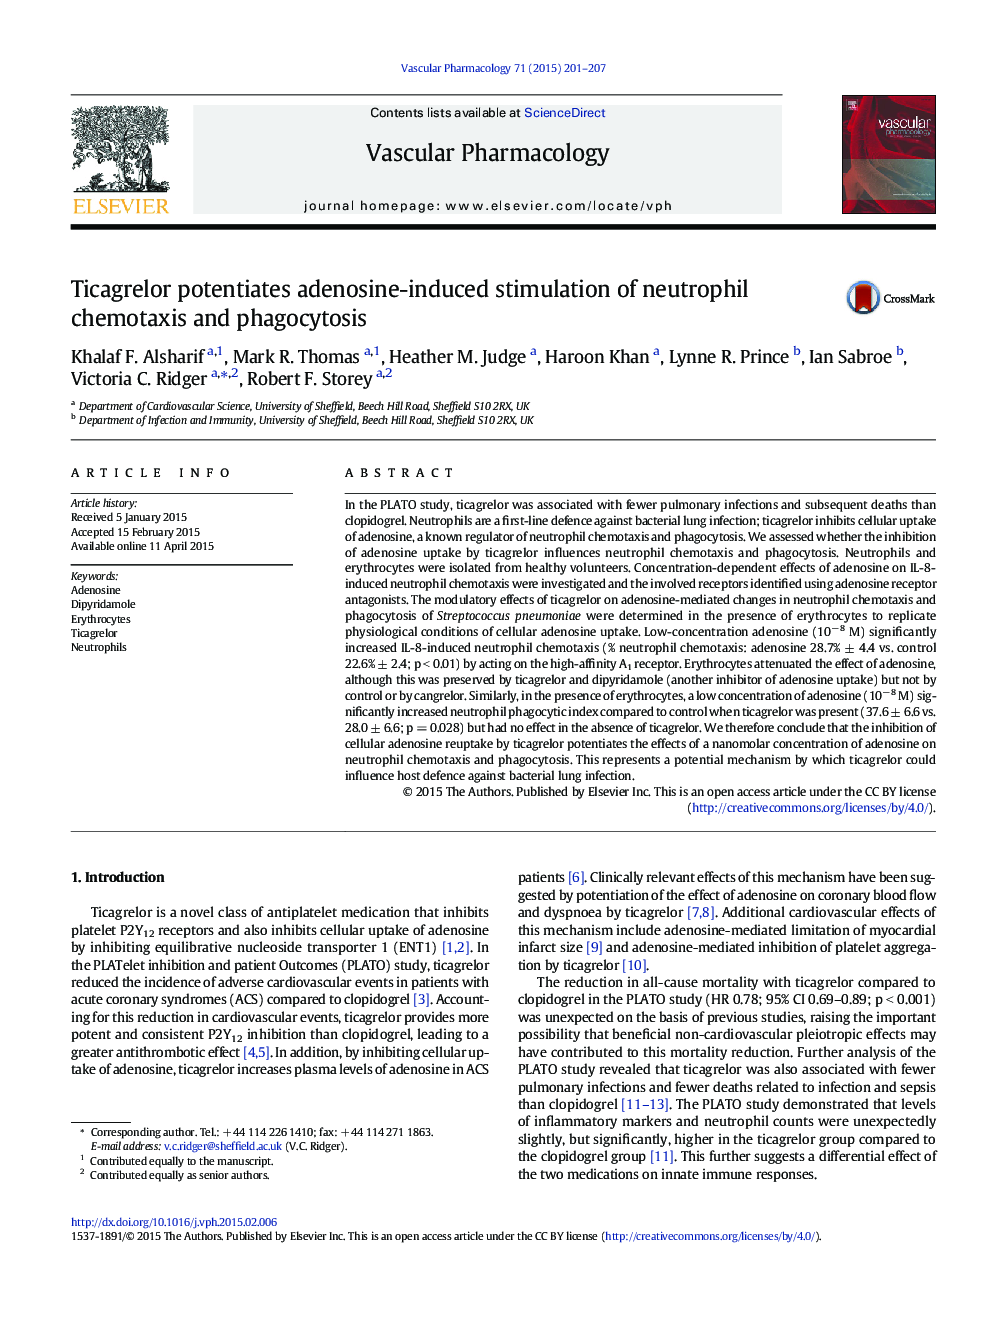 Ticagrelor potentiates adenosine-induced stimulation of neutrophil chemotaxis and phagocytosis